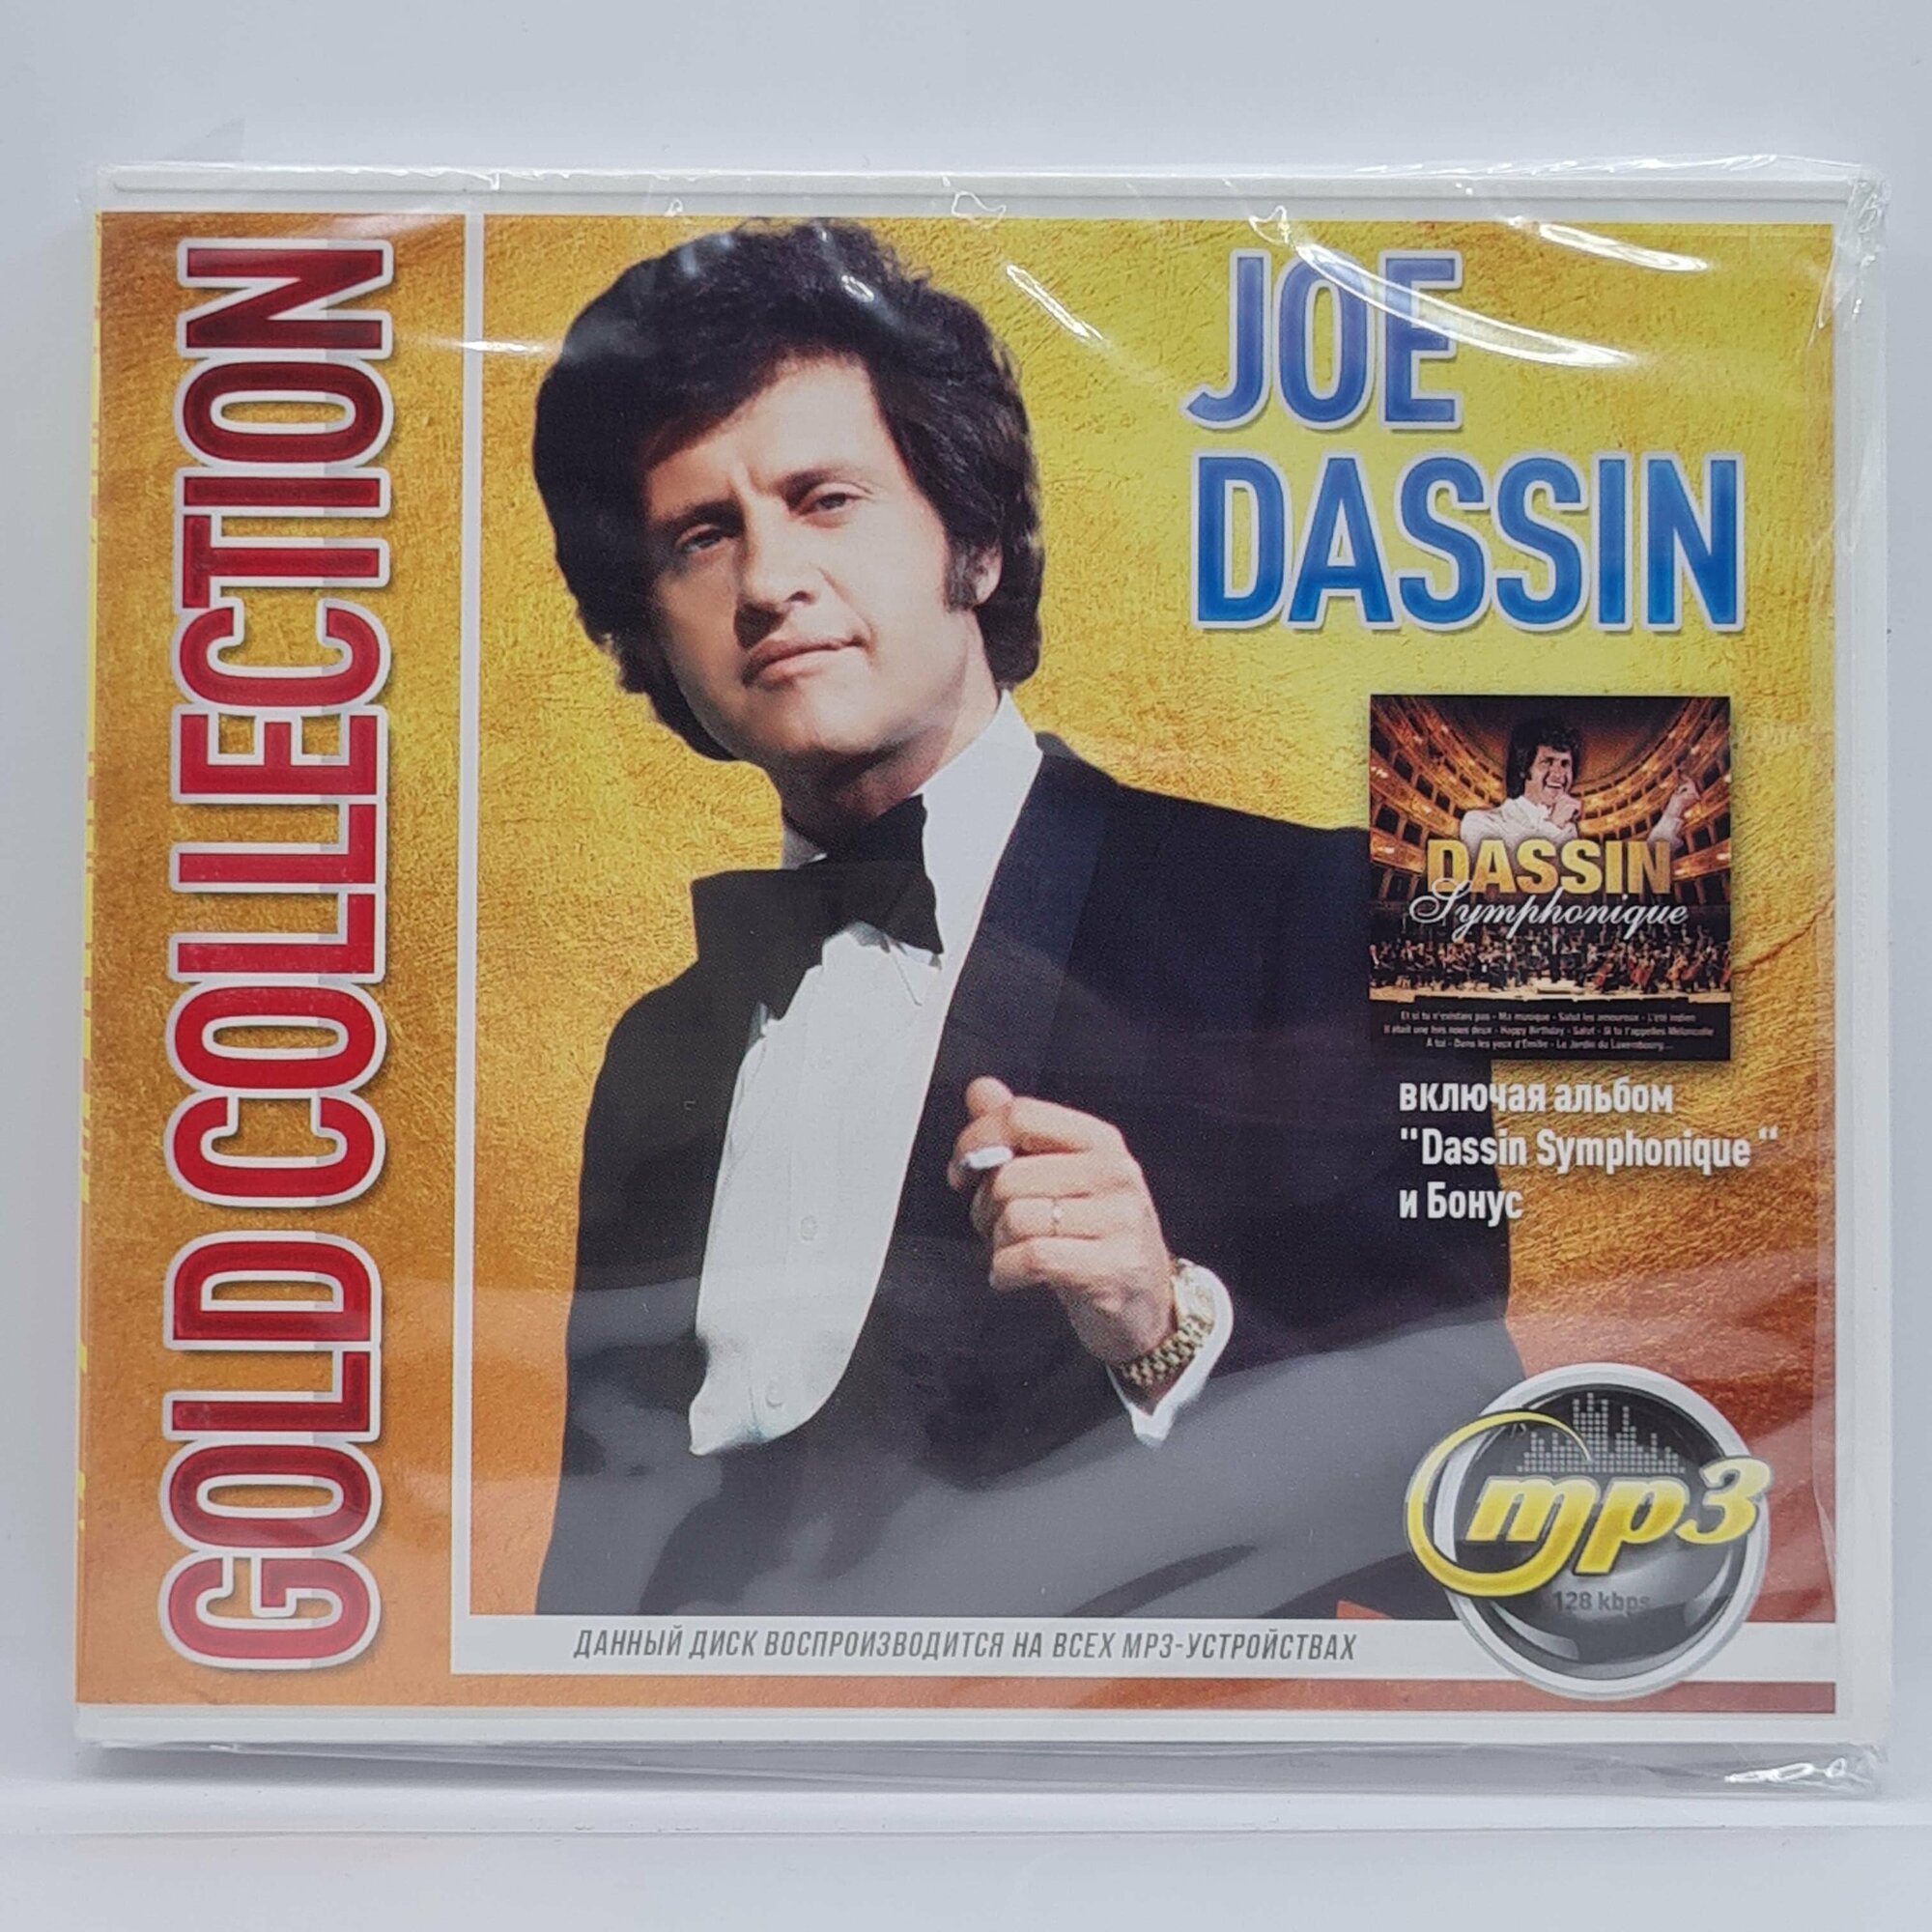 Joe Dassin Gold Collection (MP3)